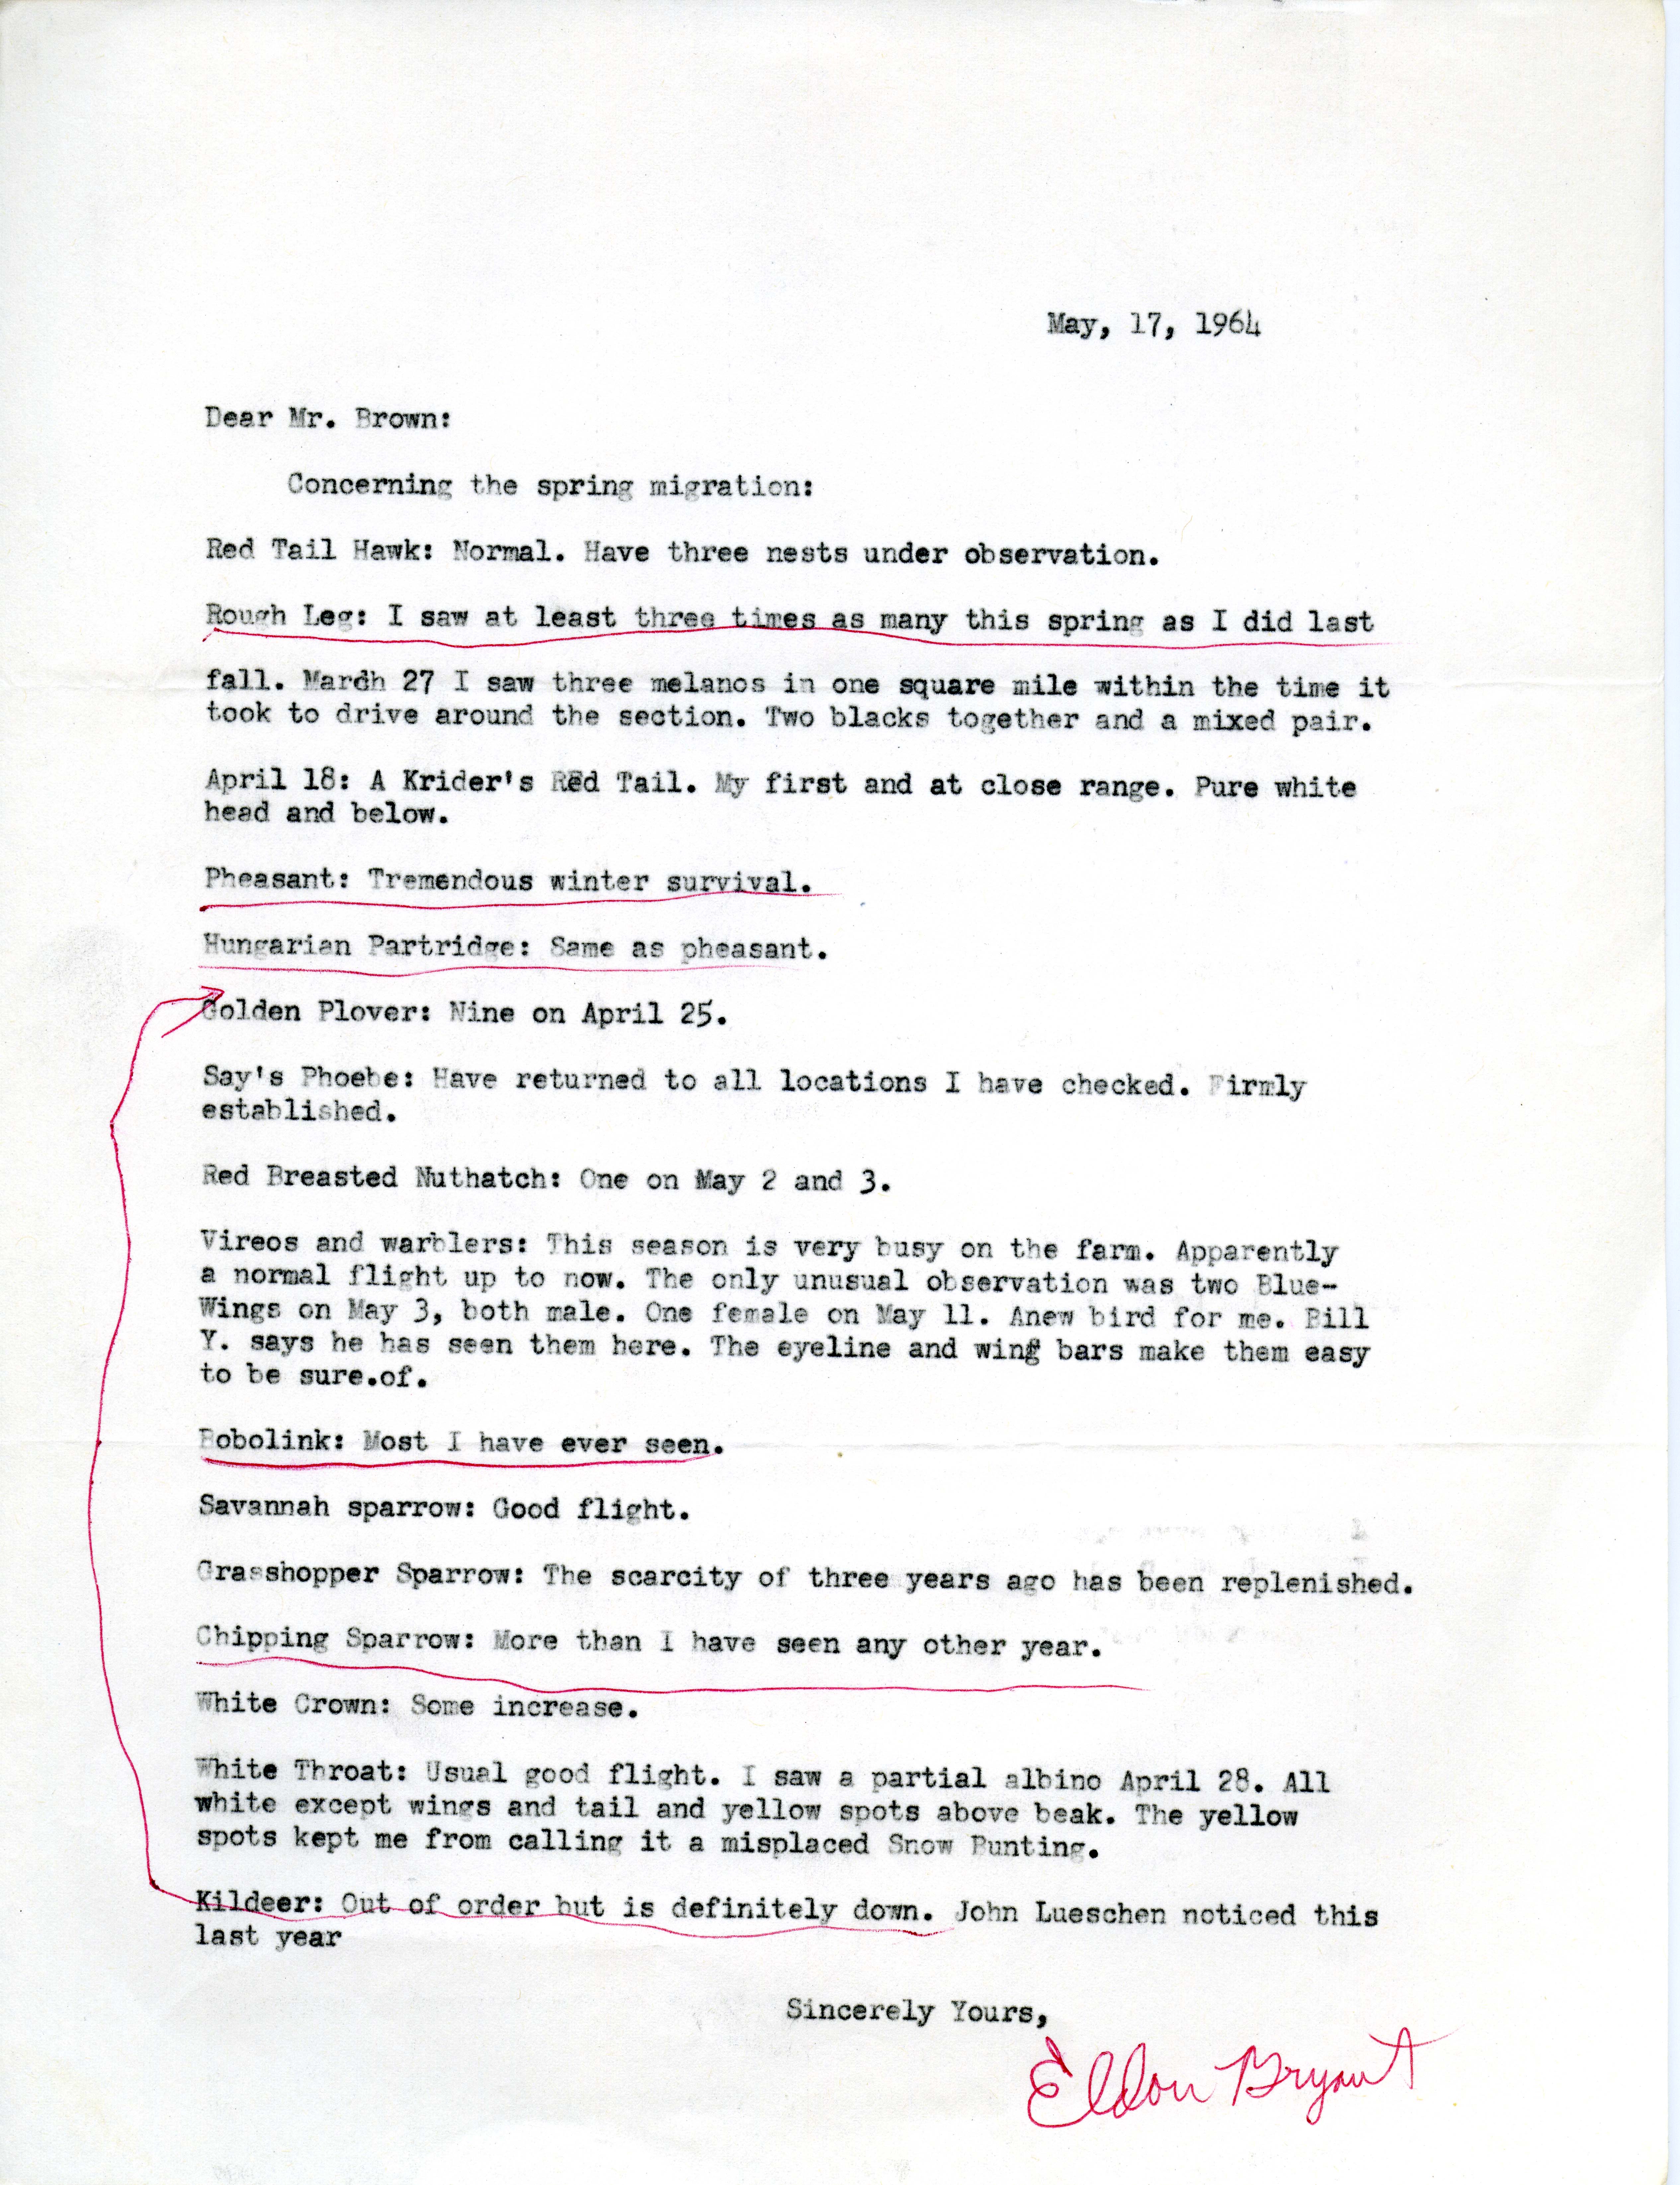 Eldon J. Bryant letter to Woodward H. Brown regarding spring migration, May 17, 1964